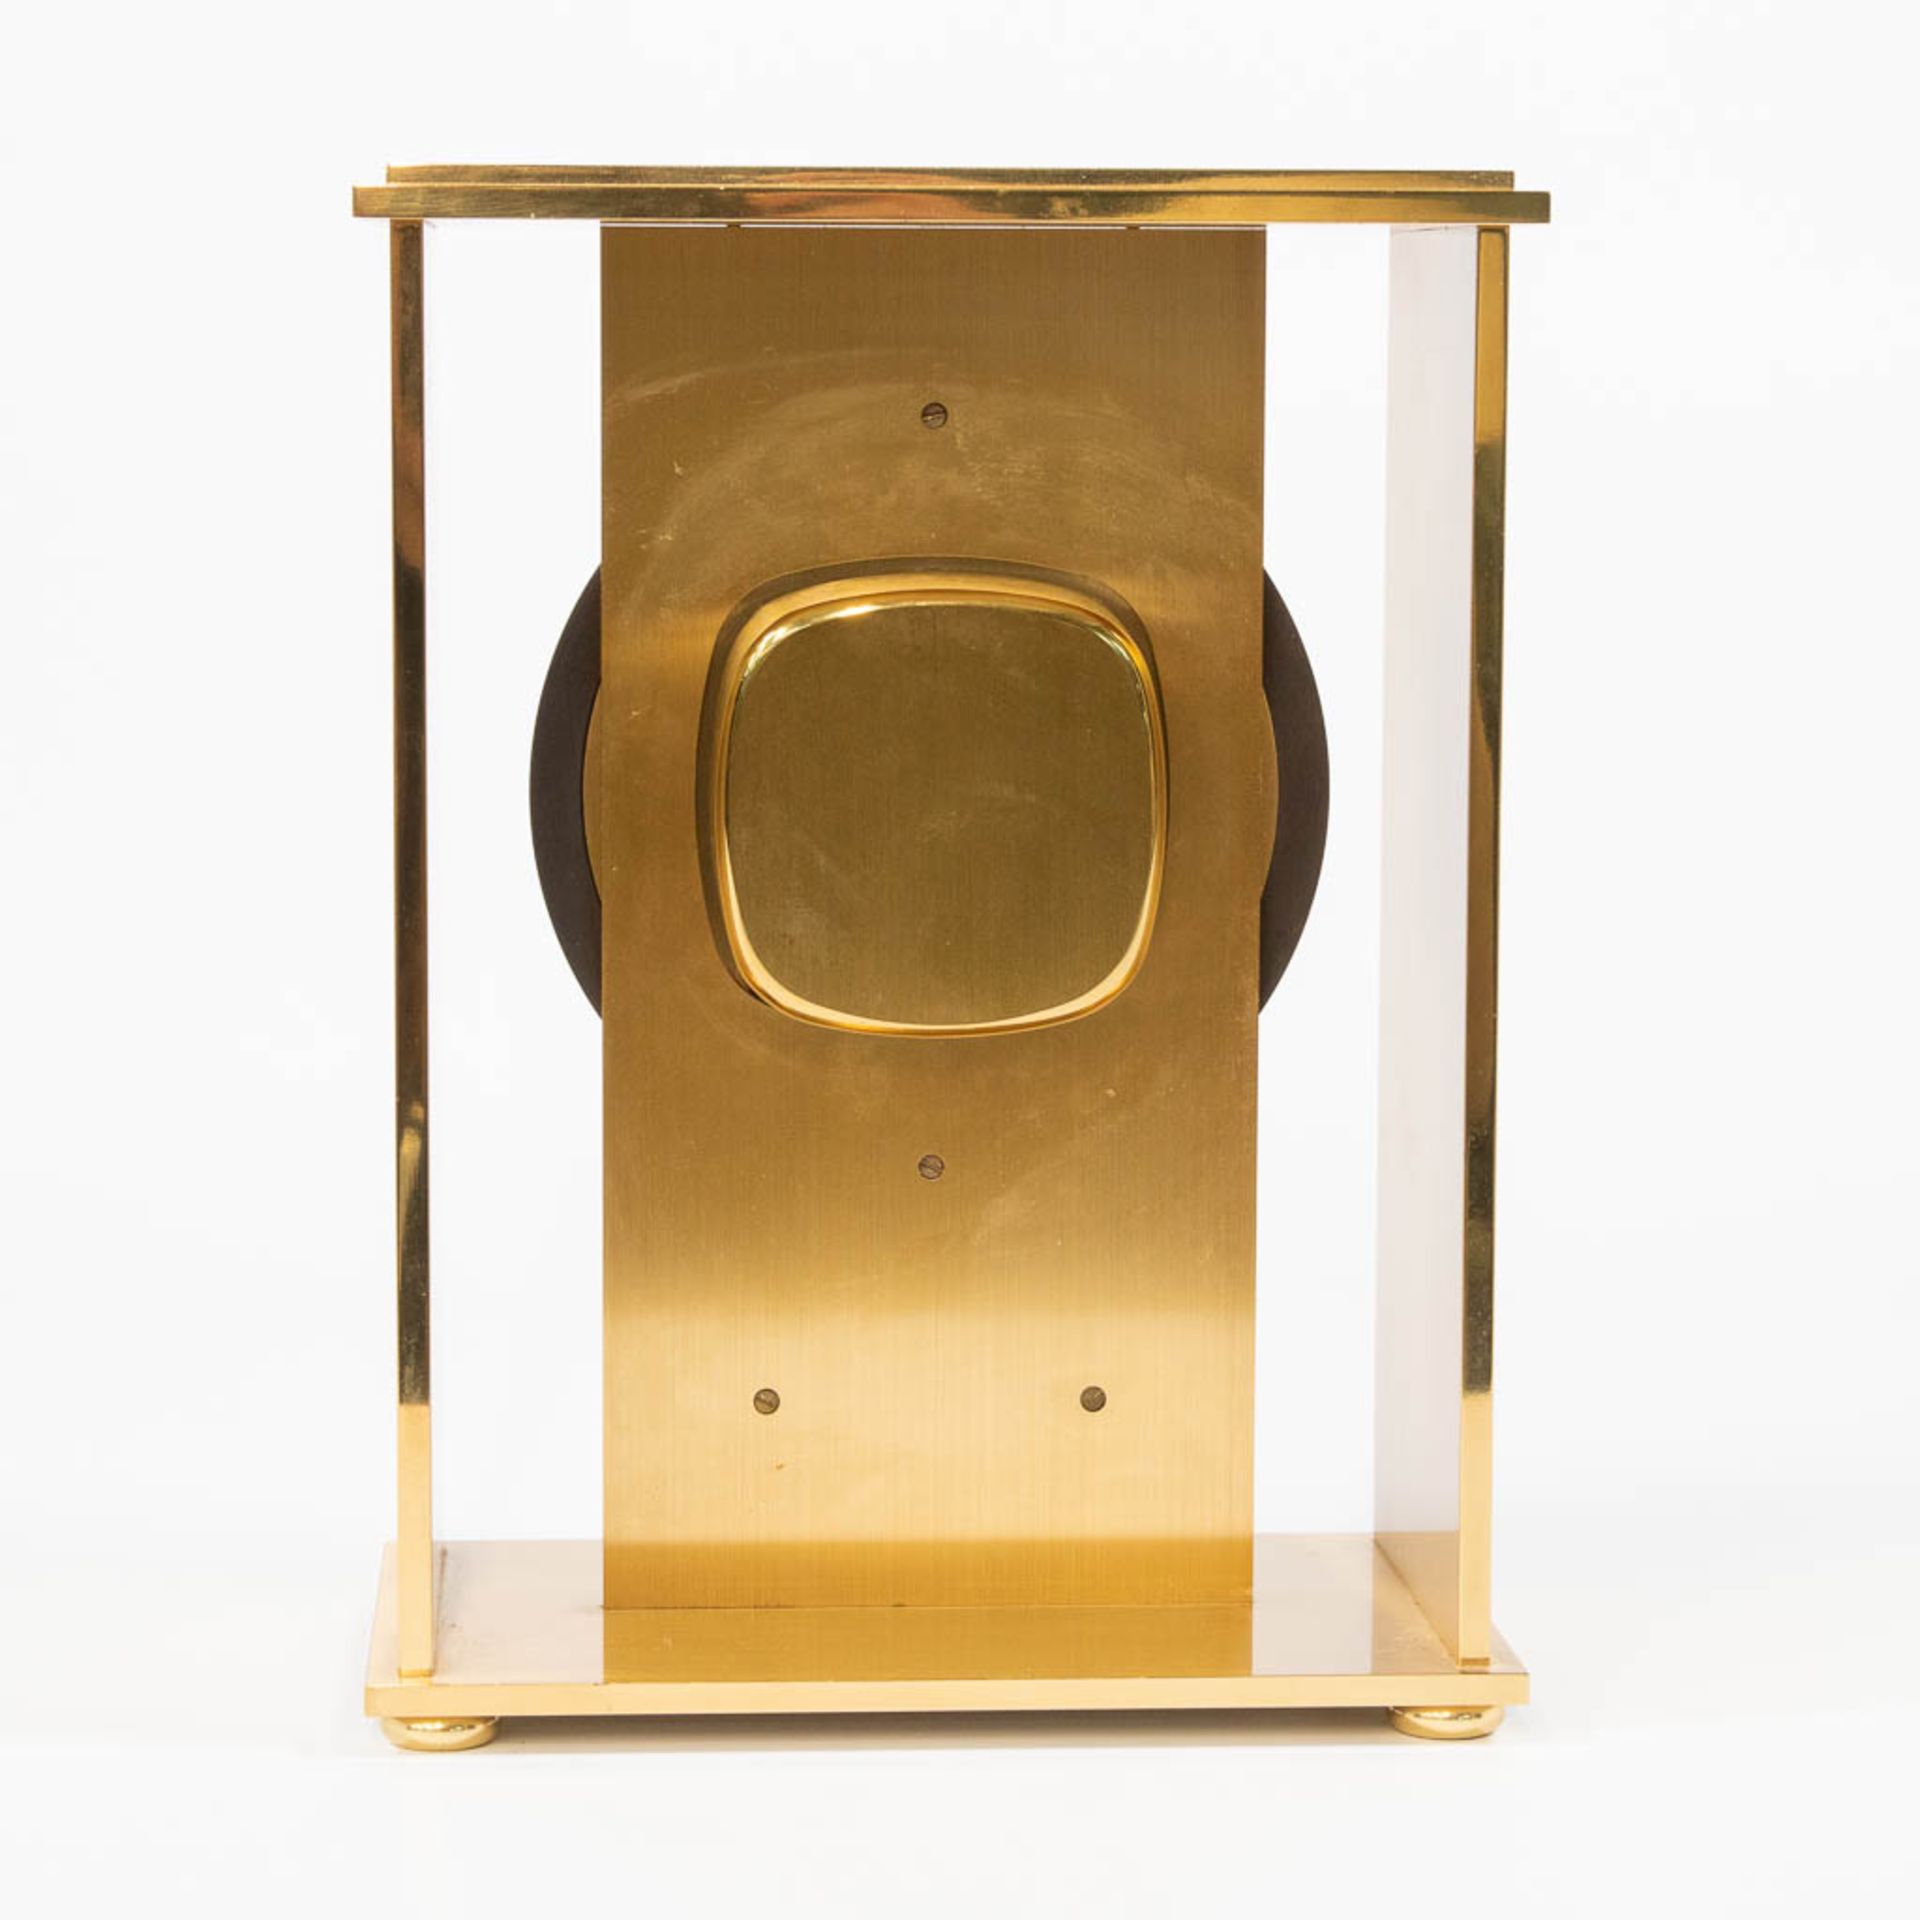 A Swiss made Swiza Table clock, made of Brass with a Quartz battery movement - Bild 5 aus 14